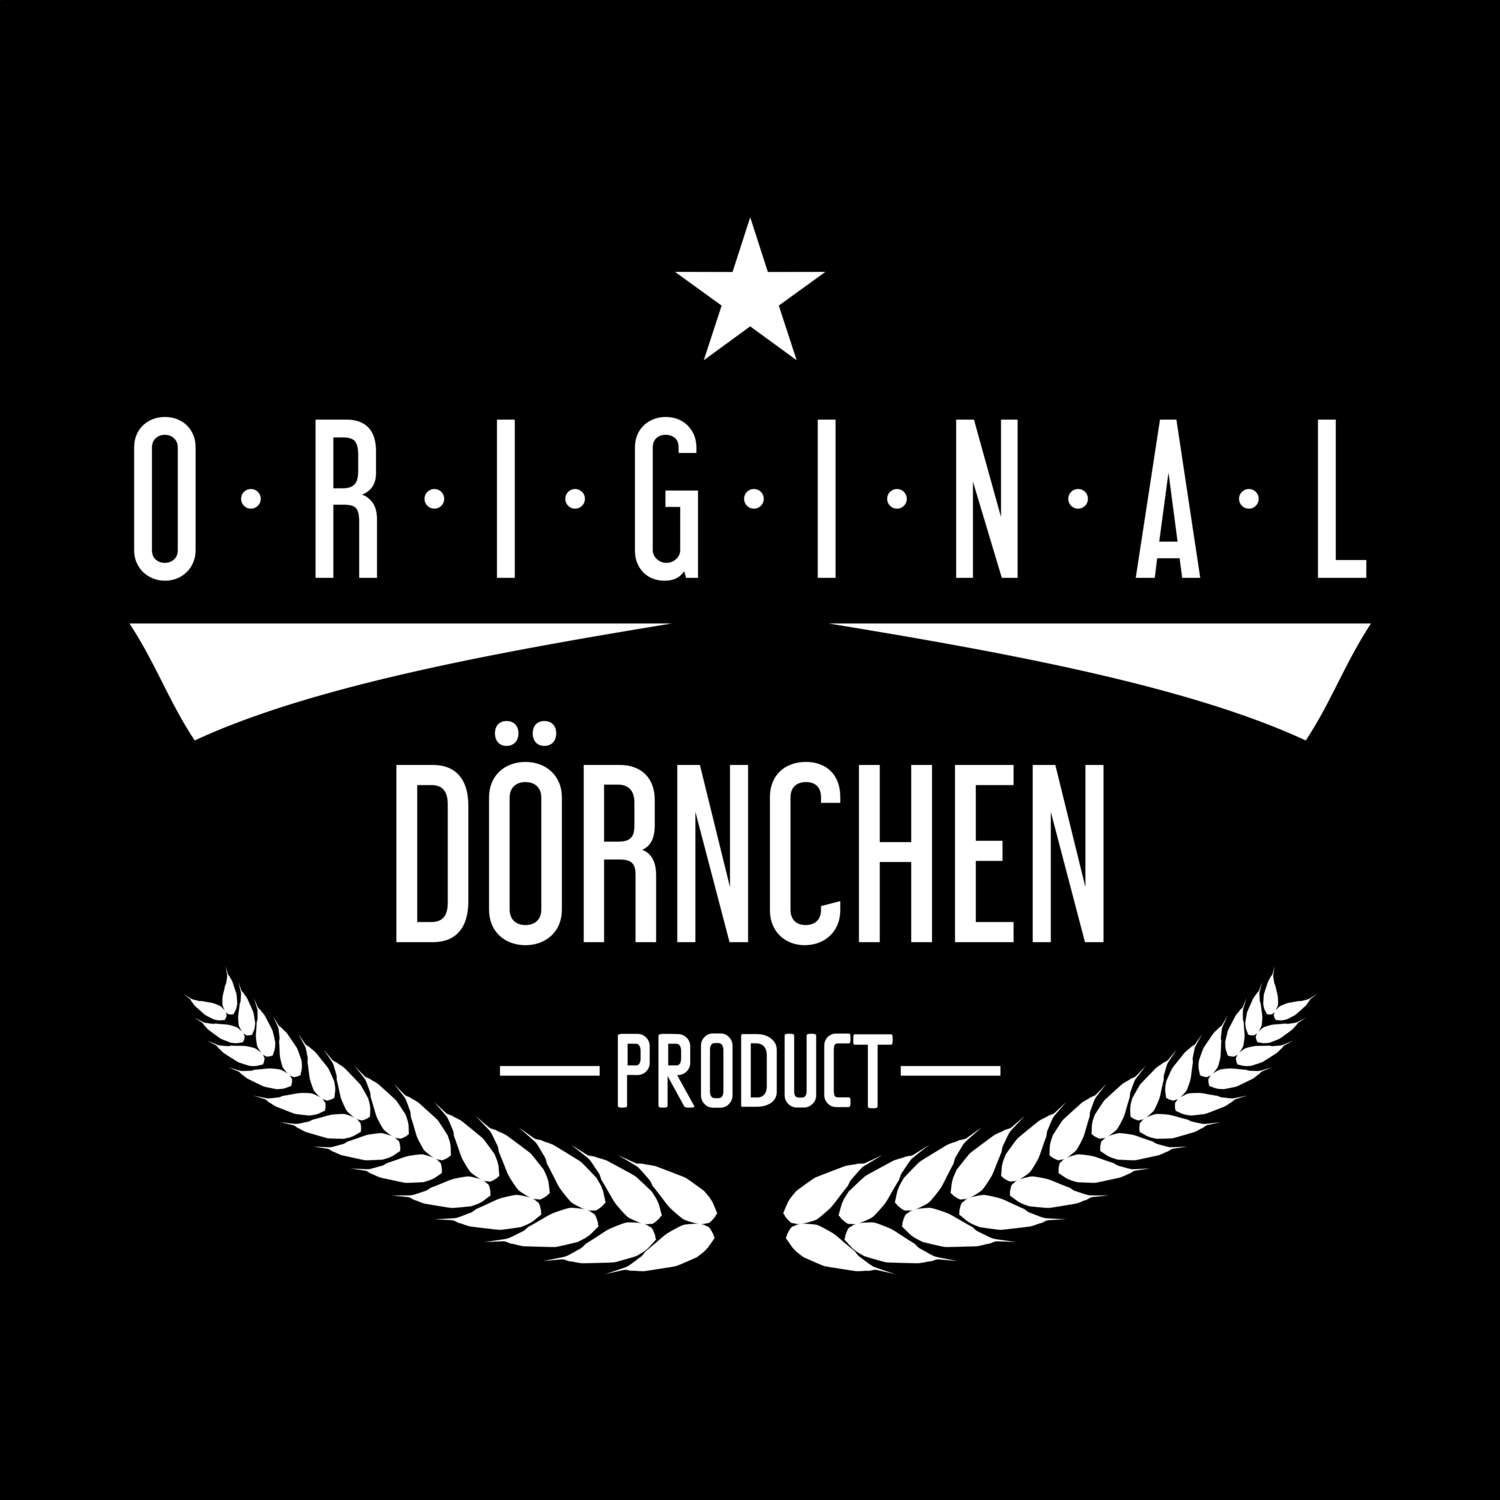 Dörnchen T-Shirt »Original Product«